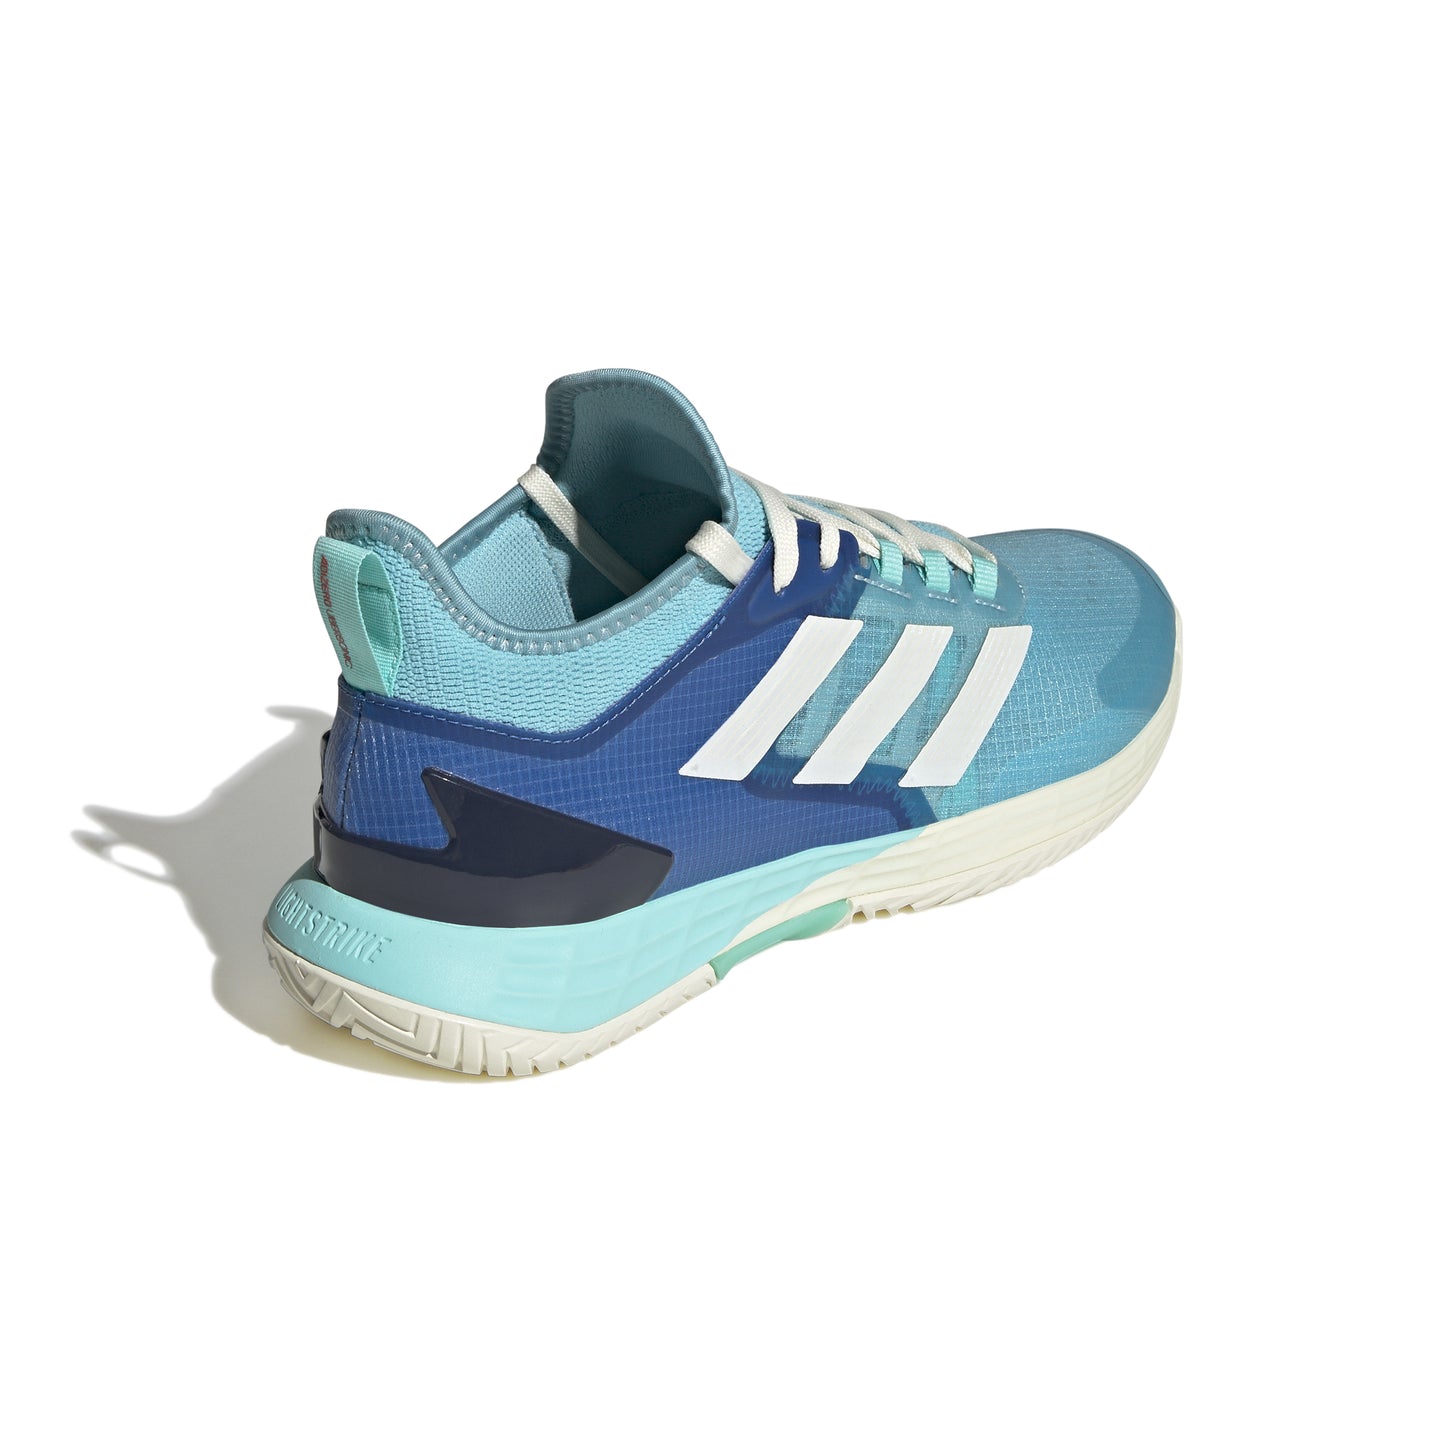 adidas Adizero Ubersonic 4.1 men tennis shoes - Light Aqua ID1562